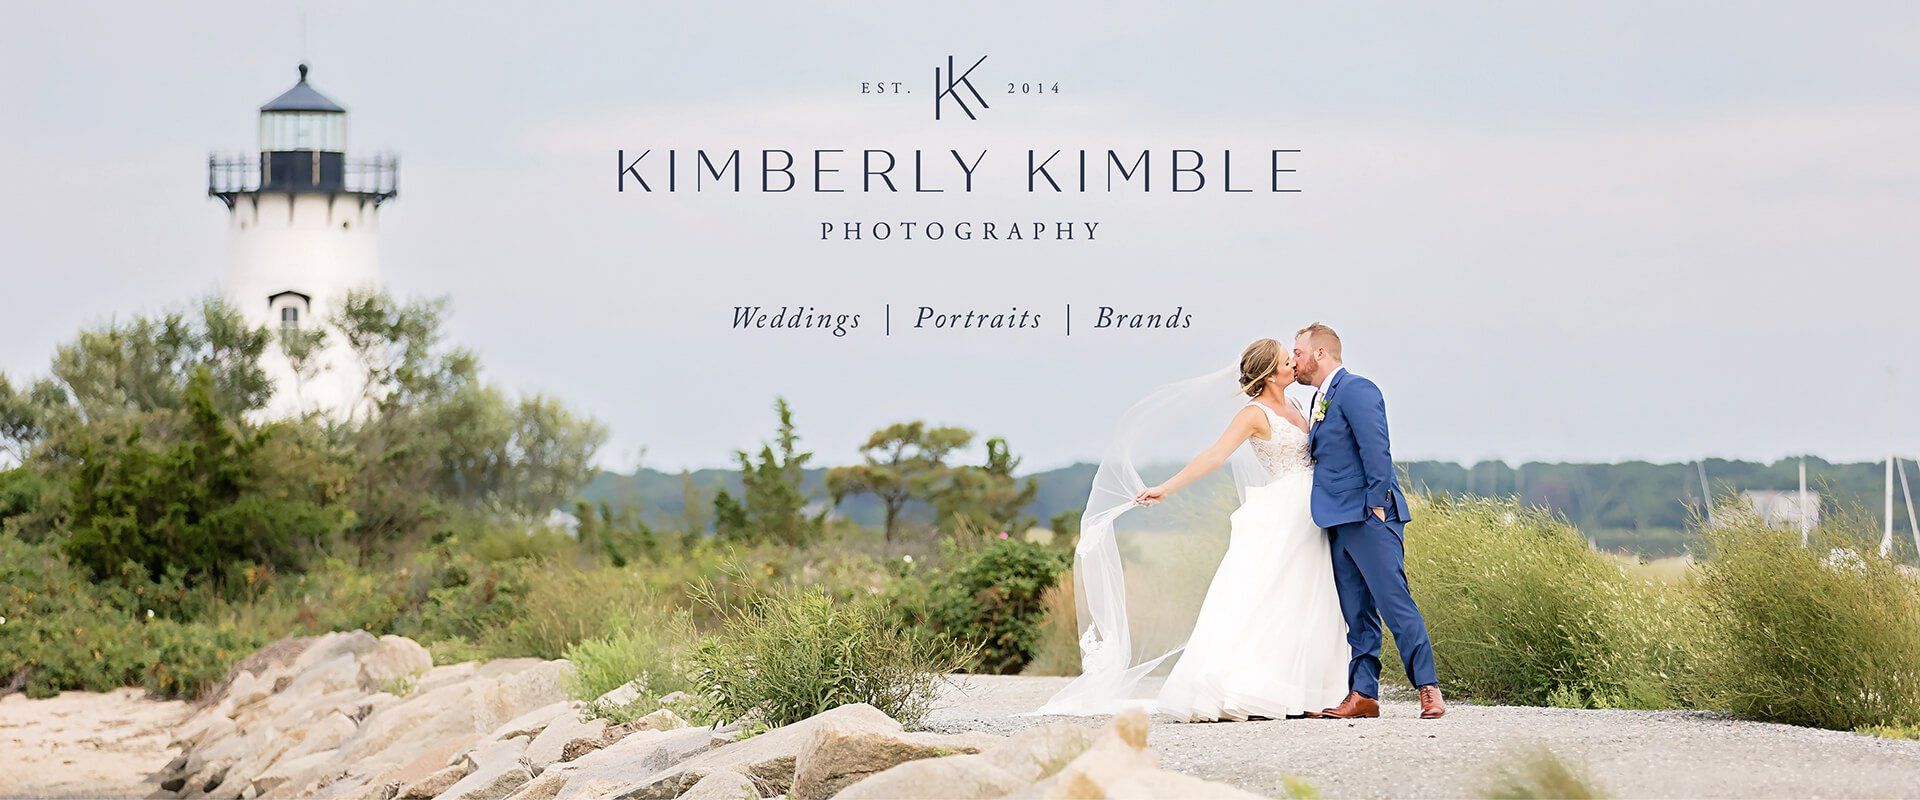 Kimberly Kimble Photography branding by Vanilla Hayes Ltd in Blenheim, New Zealand